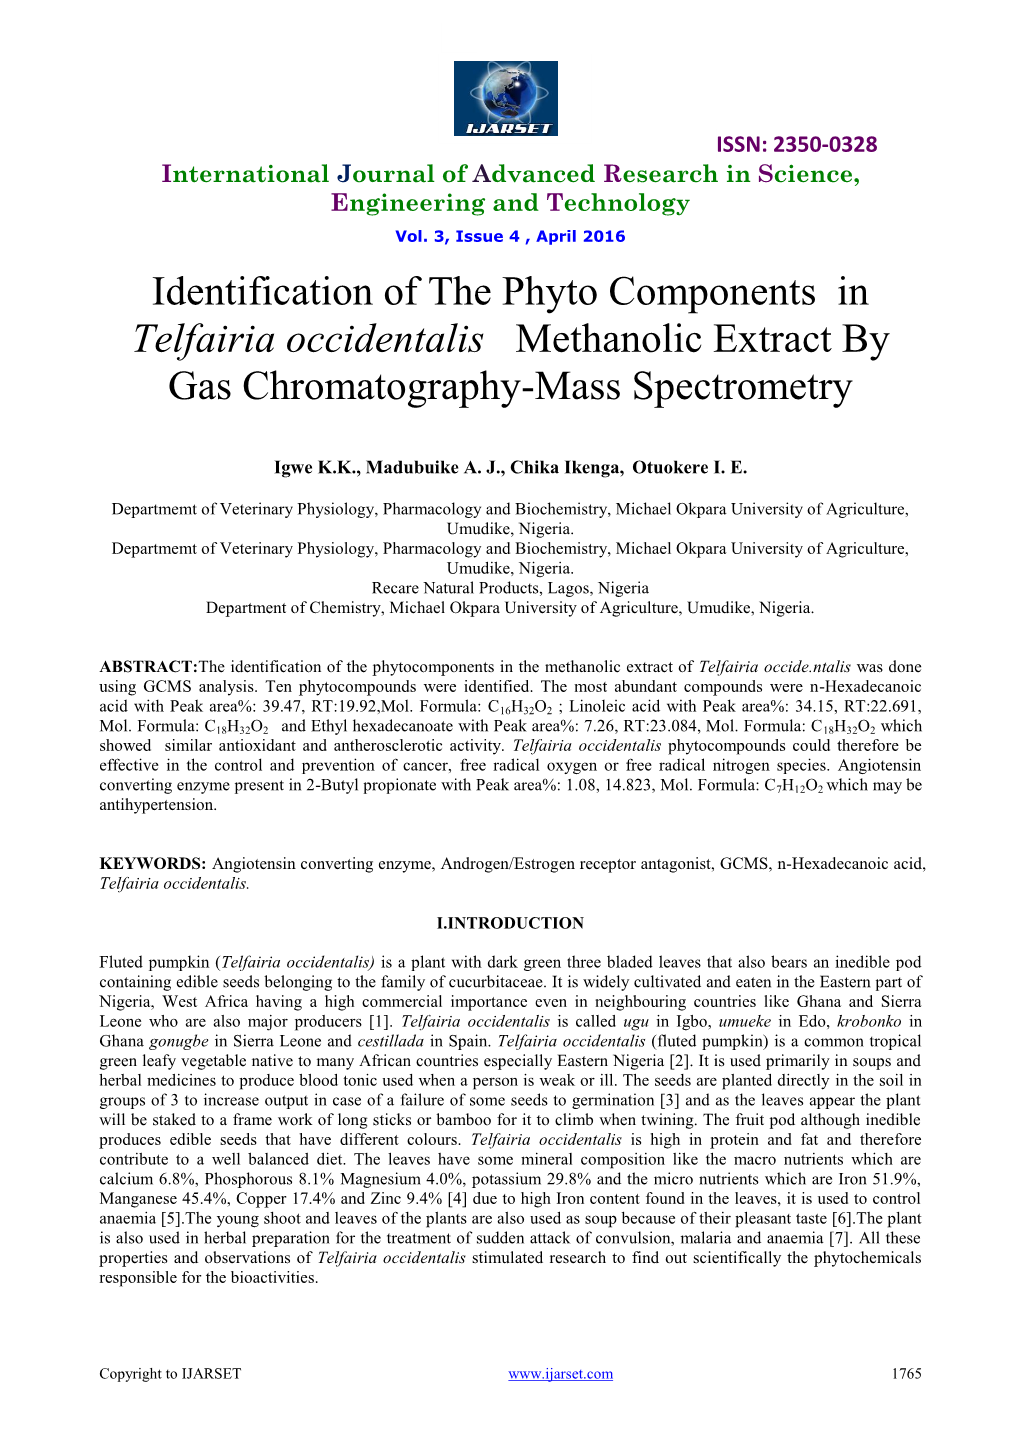 Telfairia Occidentalis Methanolic Extract by Gas Chromatography-Mass Spectrometry